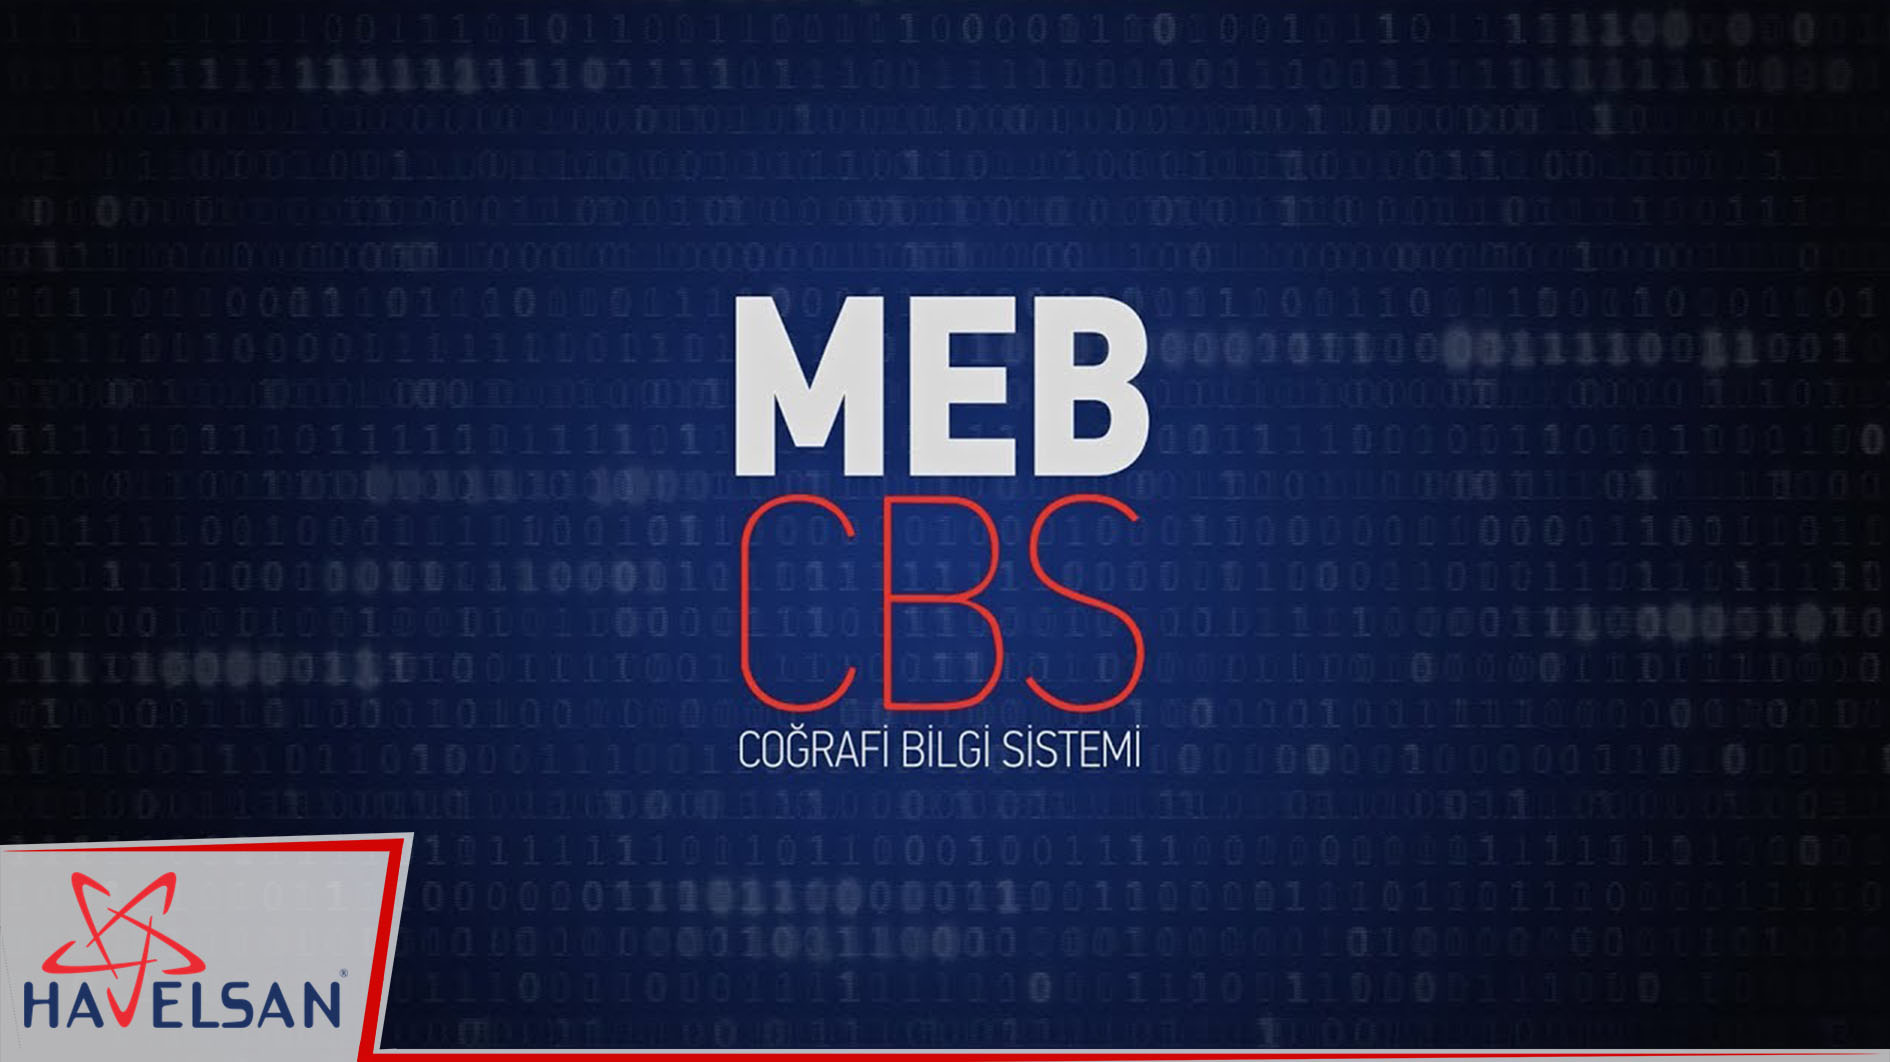 MEB'in tüm veri yönetimini tek merkezde toplayan sistem MEBCBS